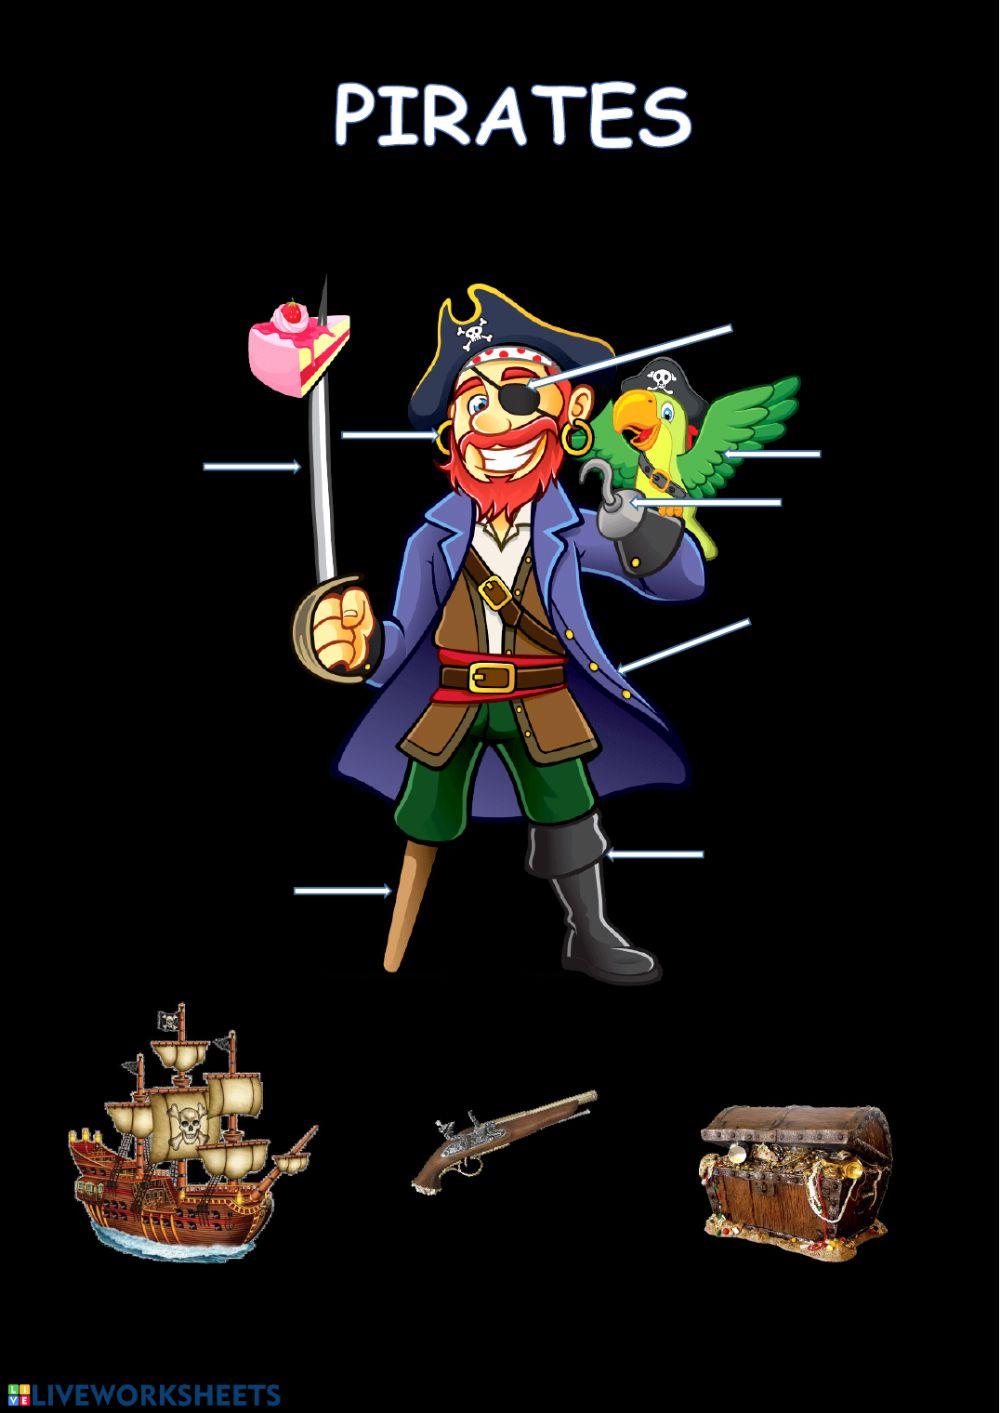 Pirates - vocabulary